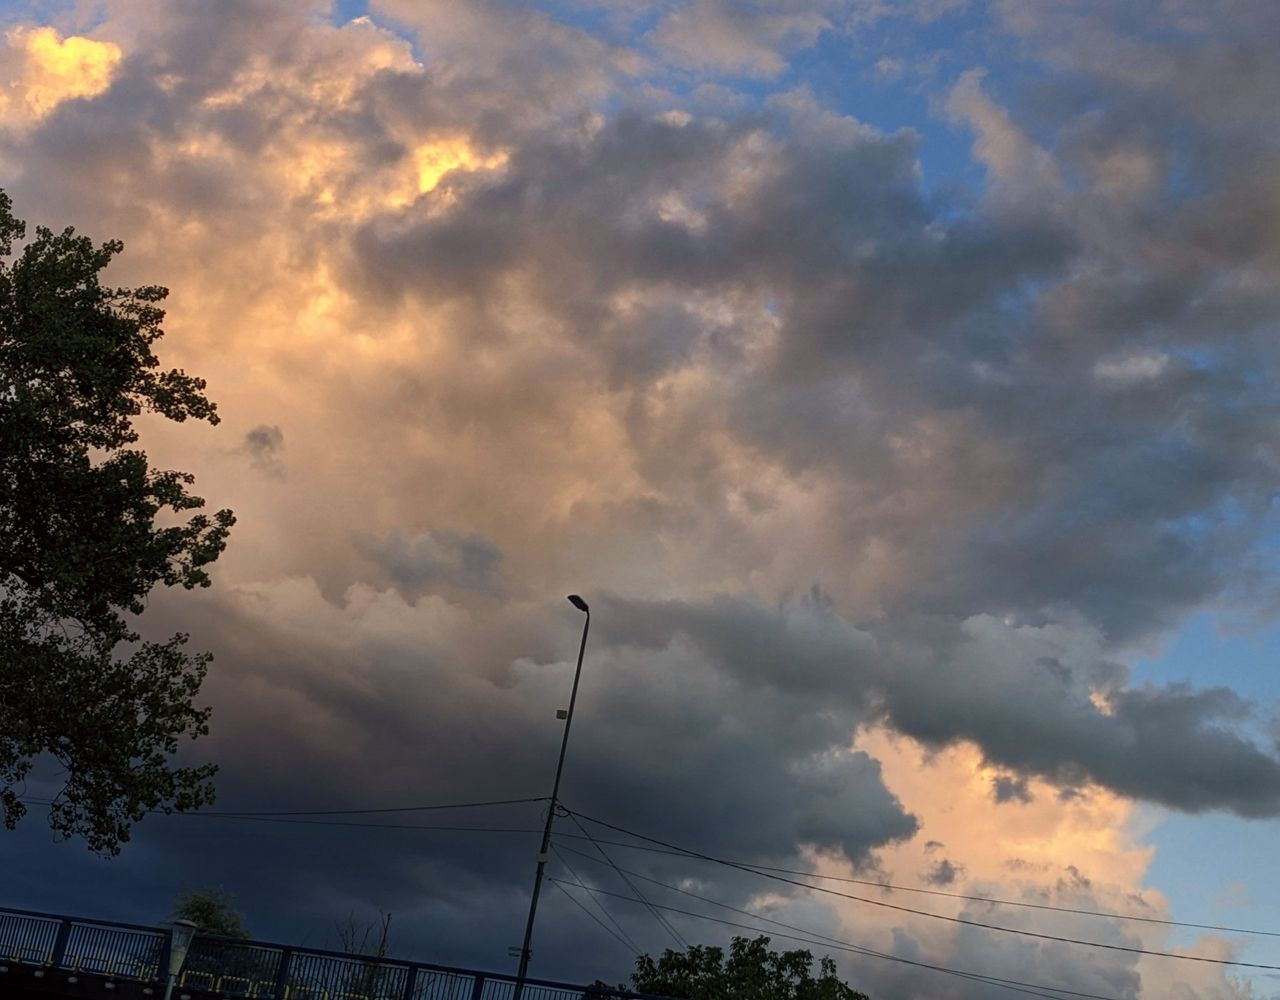 Evening storm clouds